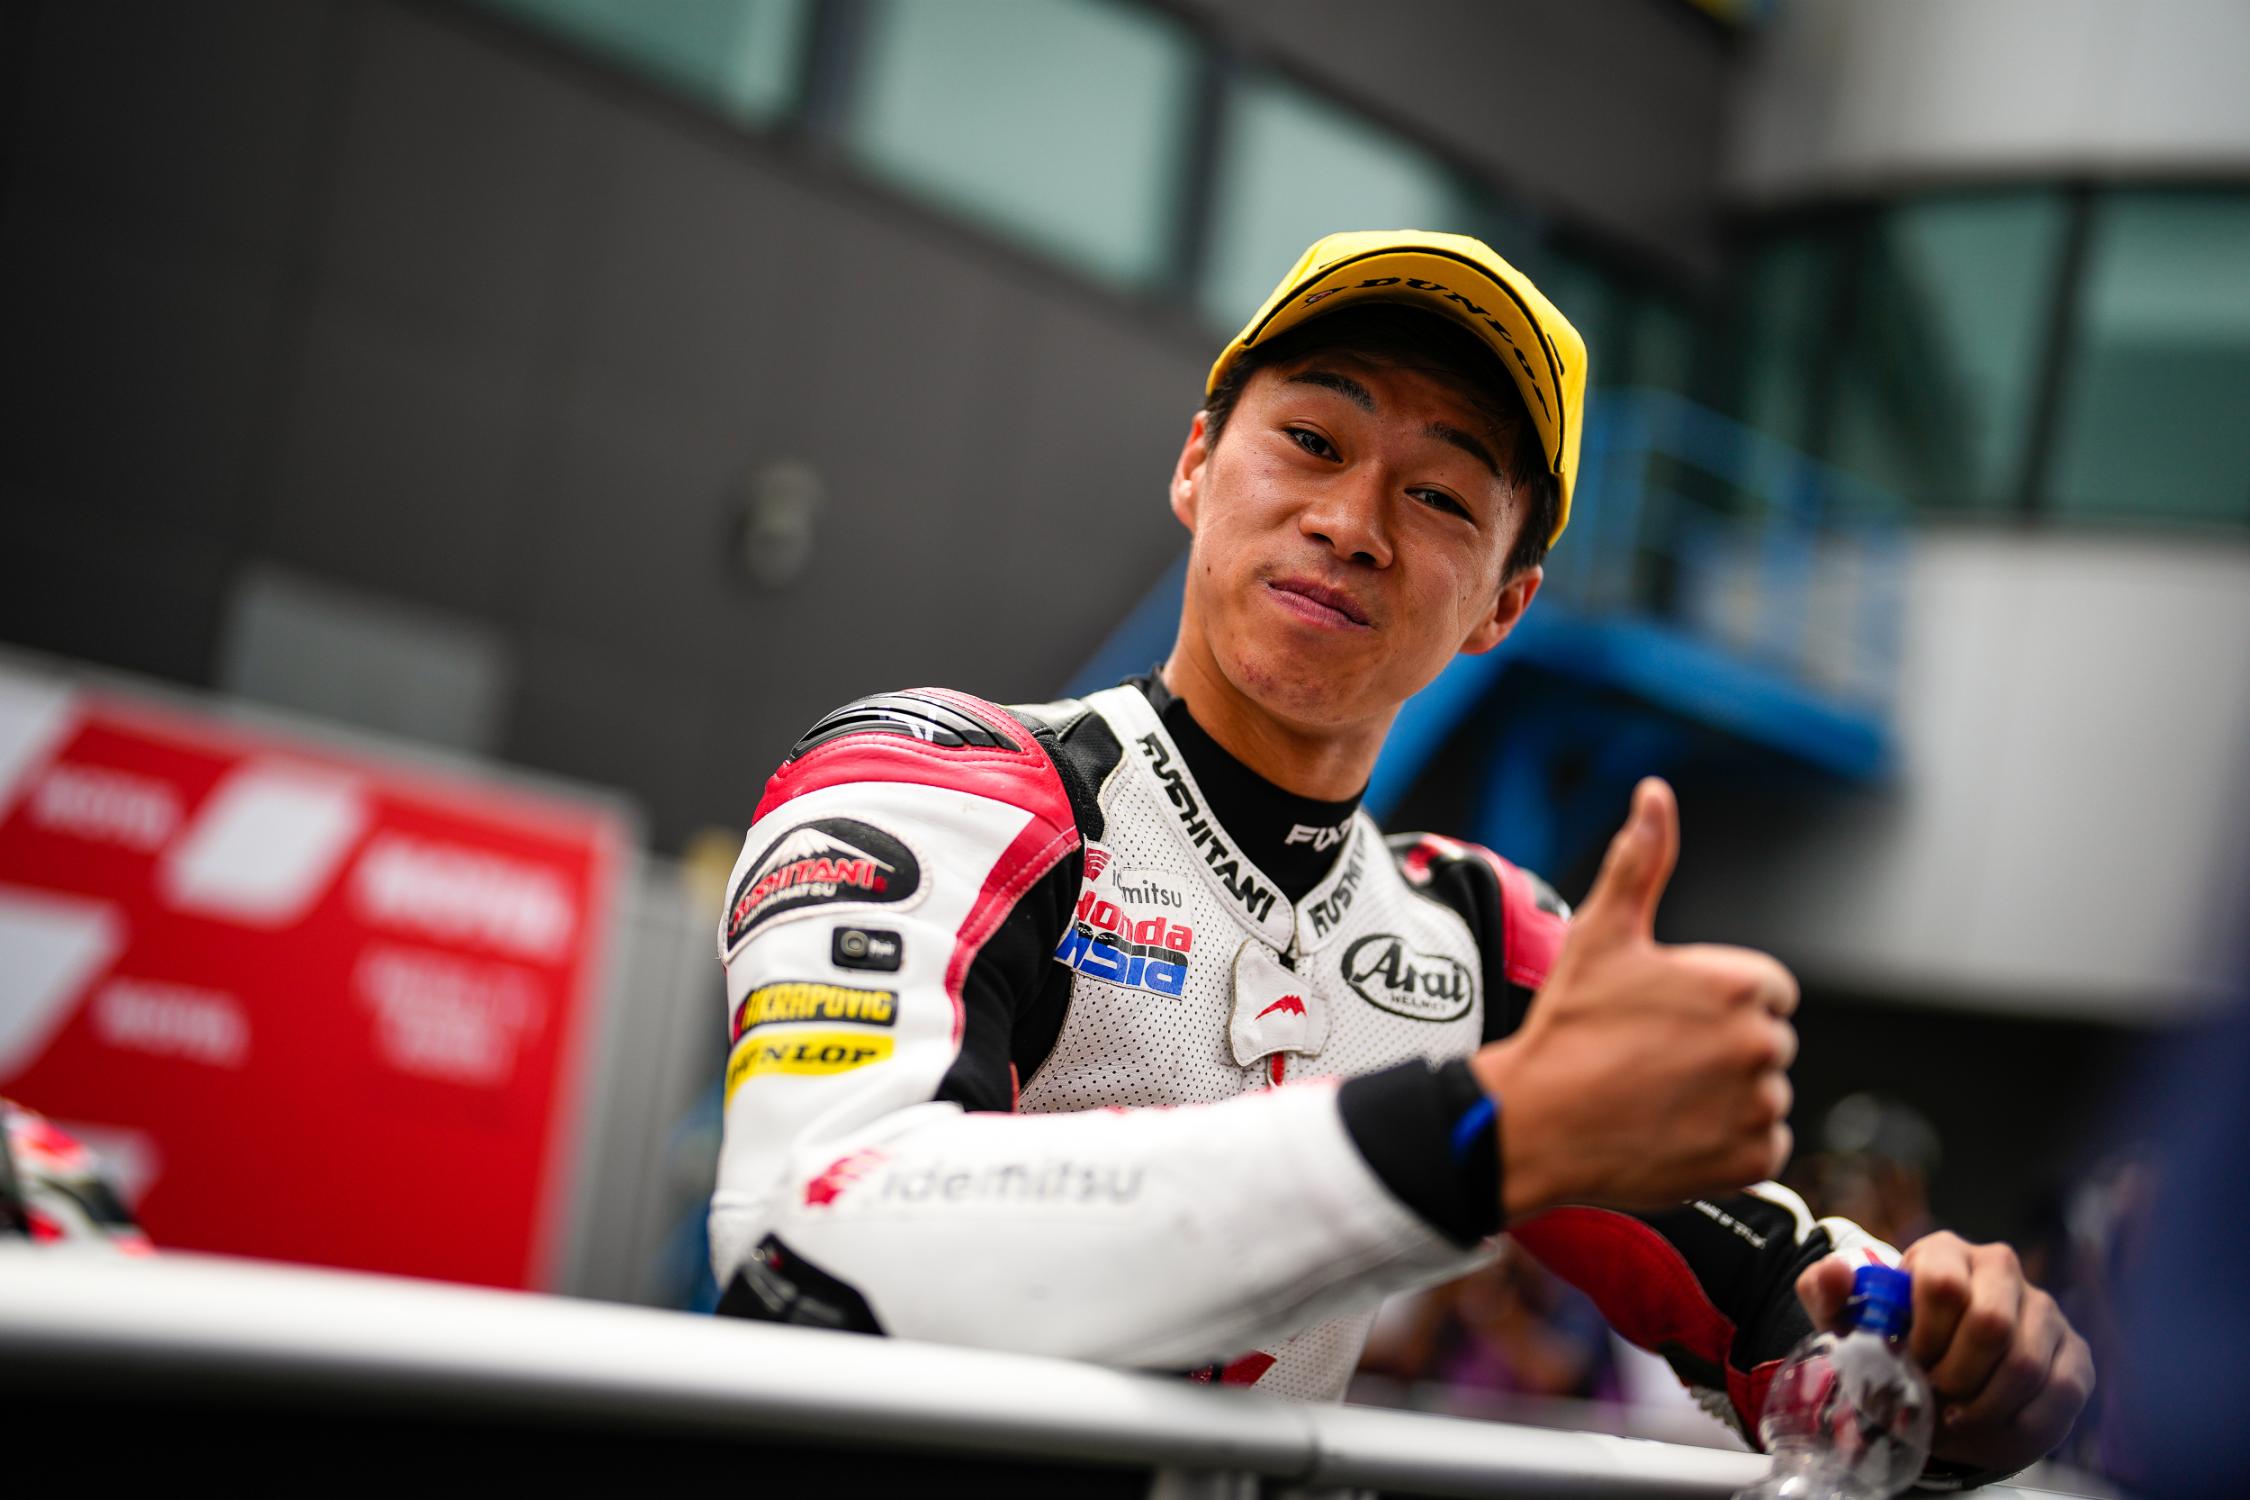 Moto2 Austria Qualifying: Superb qualifying for Ai Ogura who takes pole